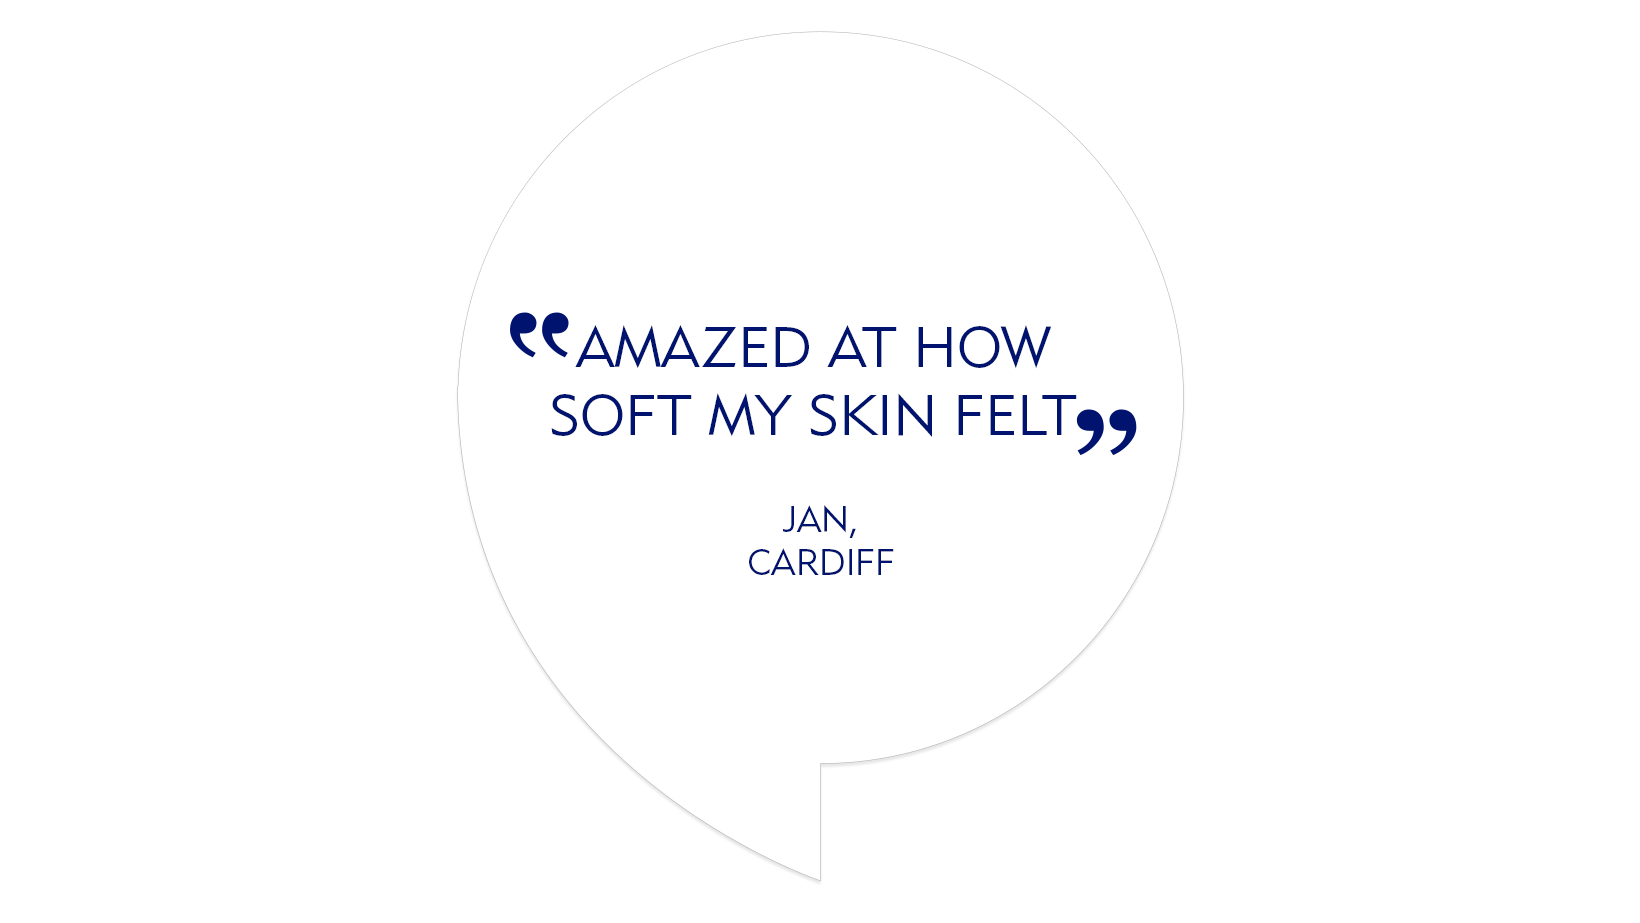 Testimonial quote "Amazed at how soft my skin felt"